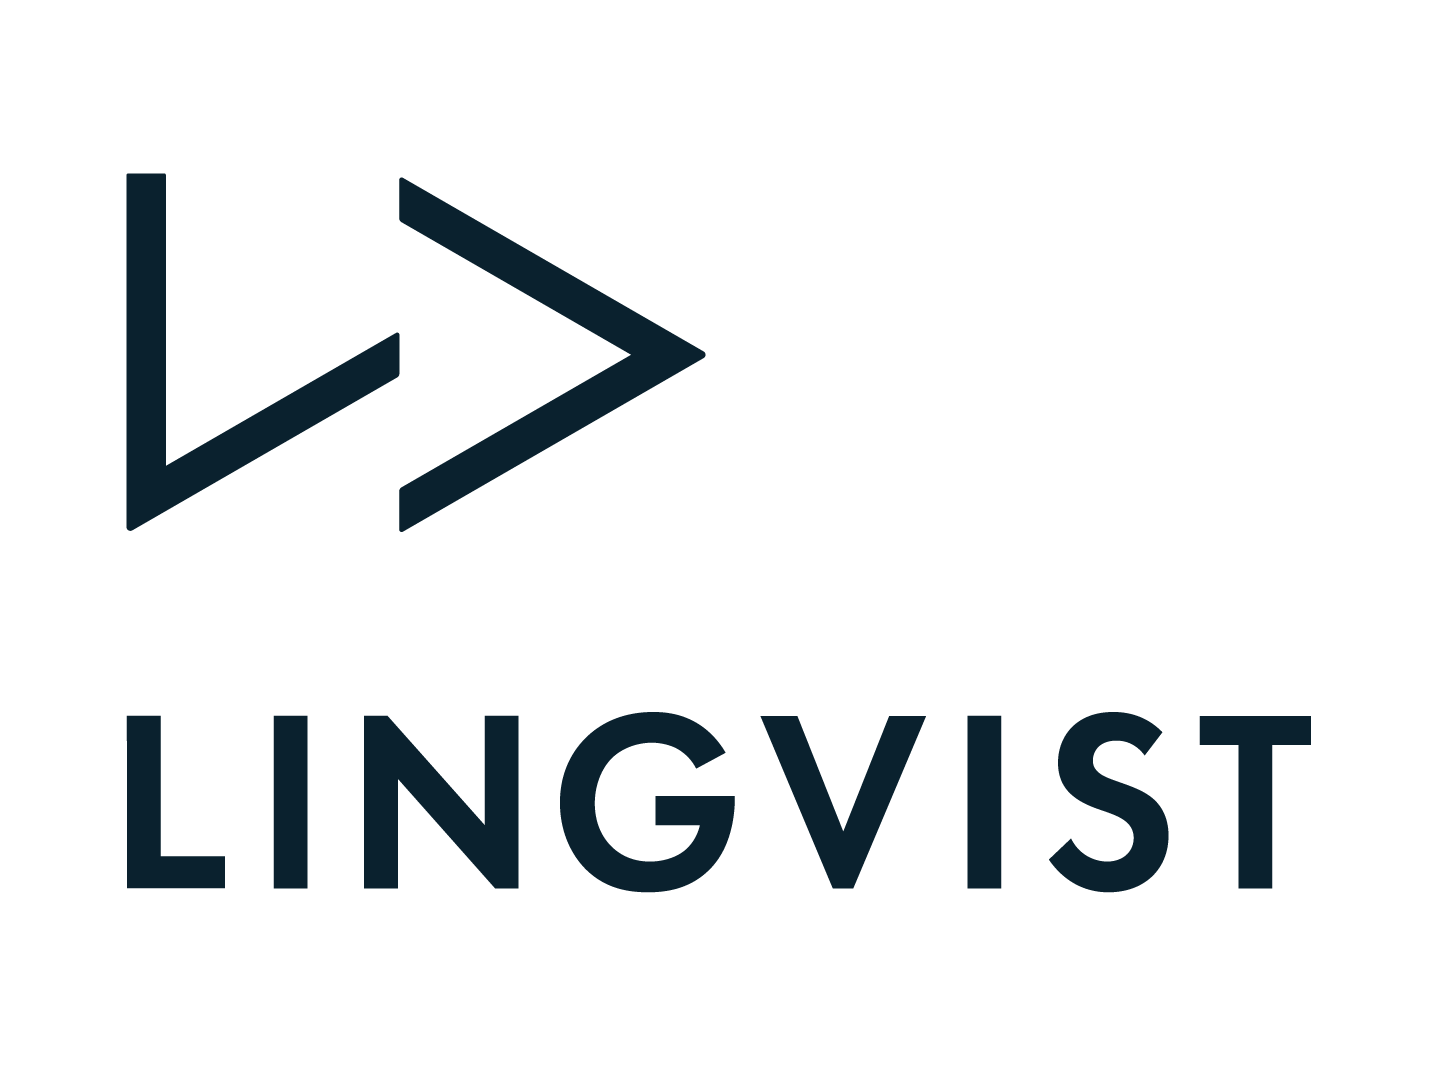 Lingvist